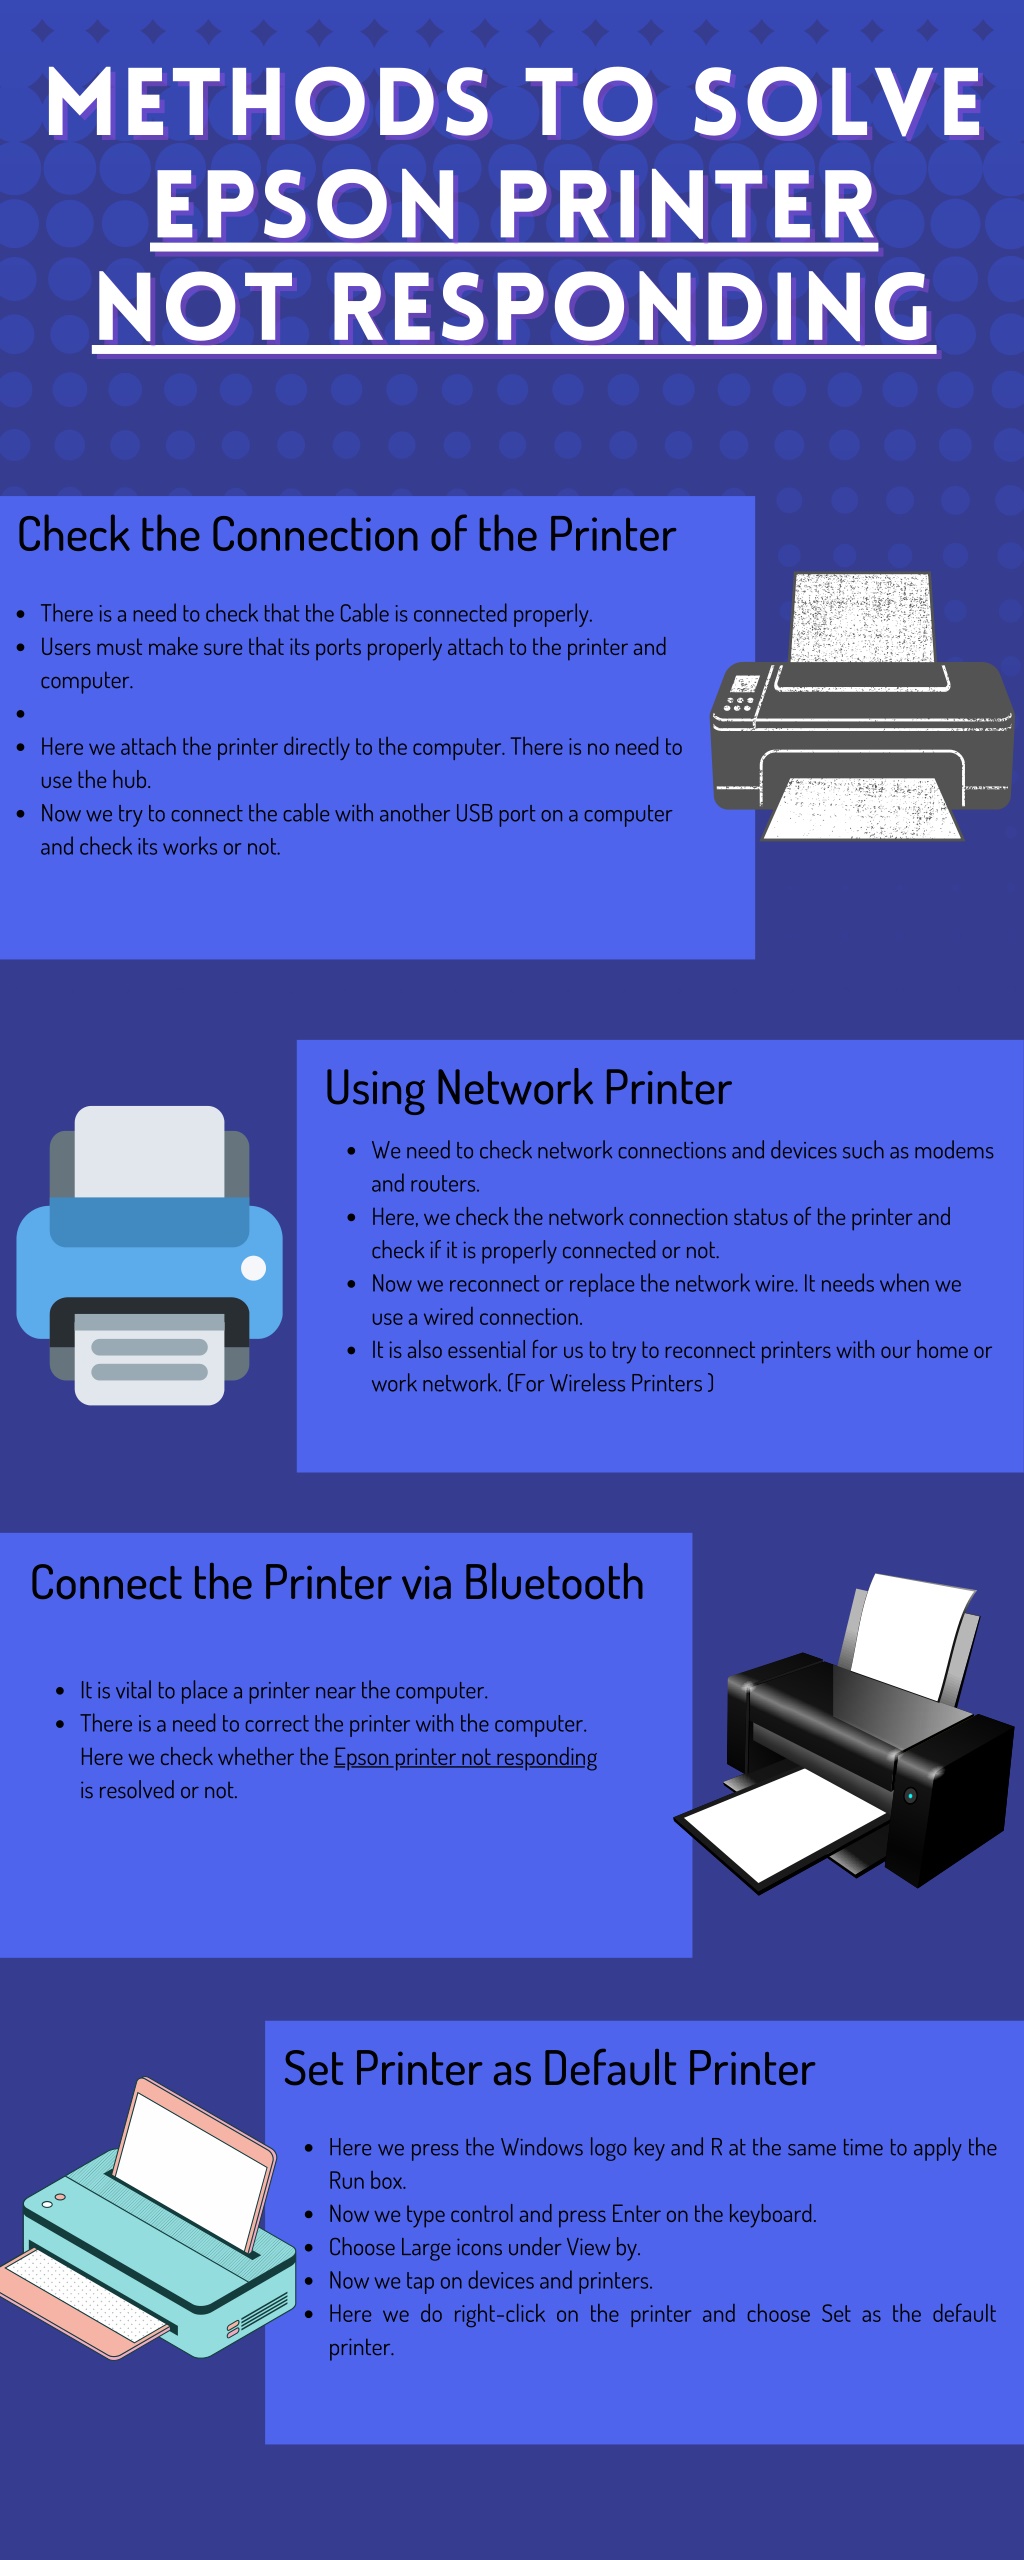 Ppt Methods To Solve Epson Printer Not Responding Powerpoint Presentation Id11667906 4908